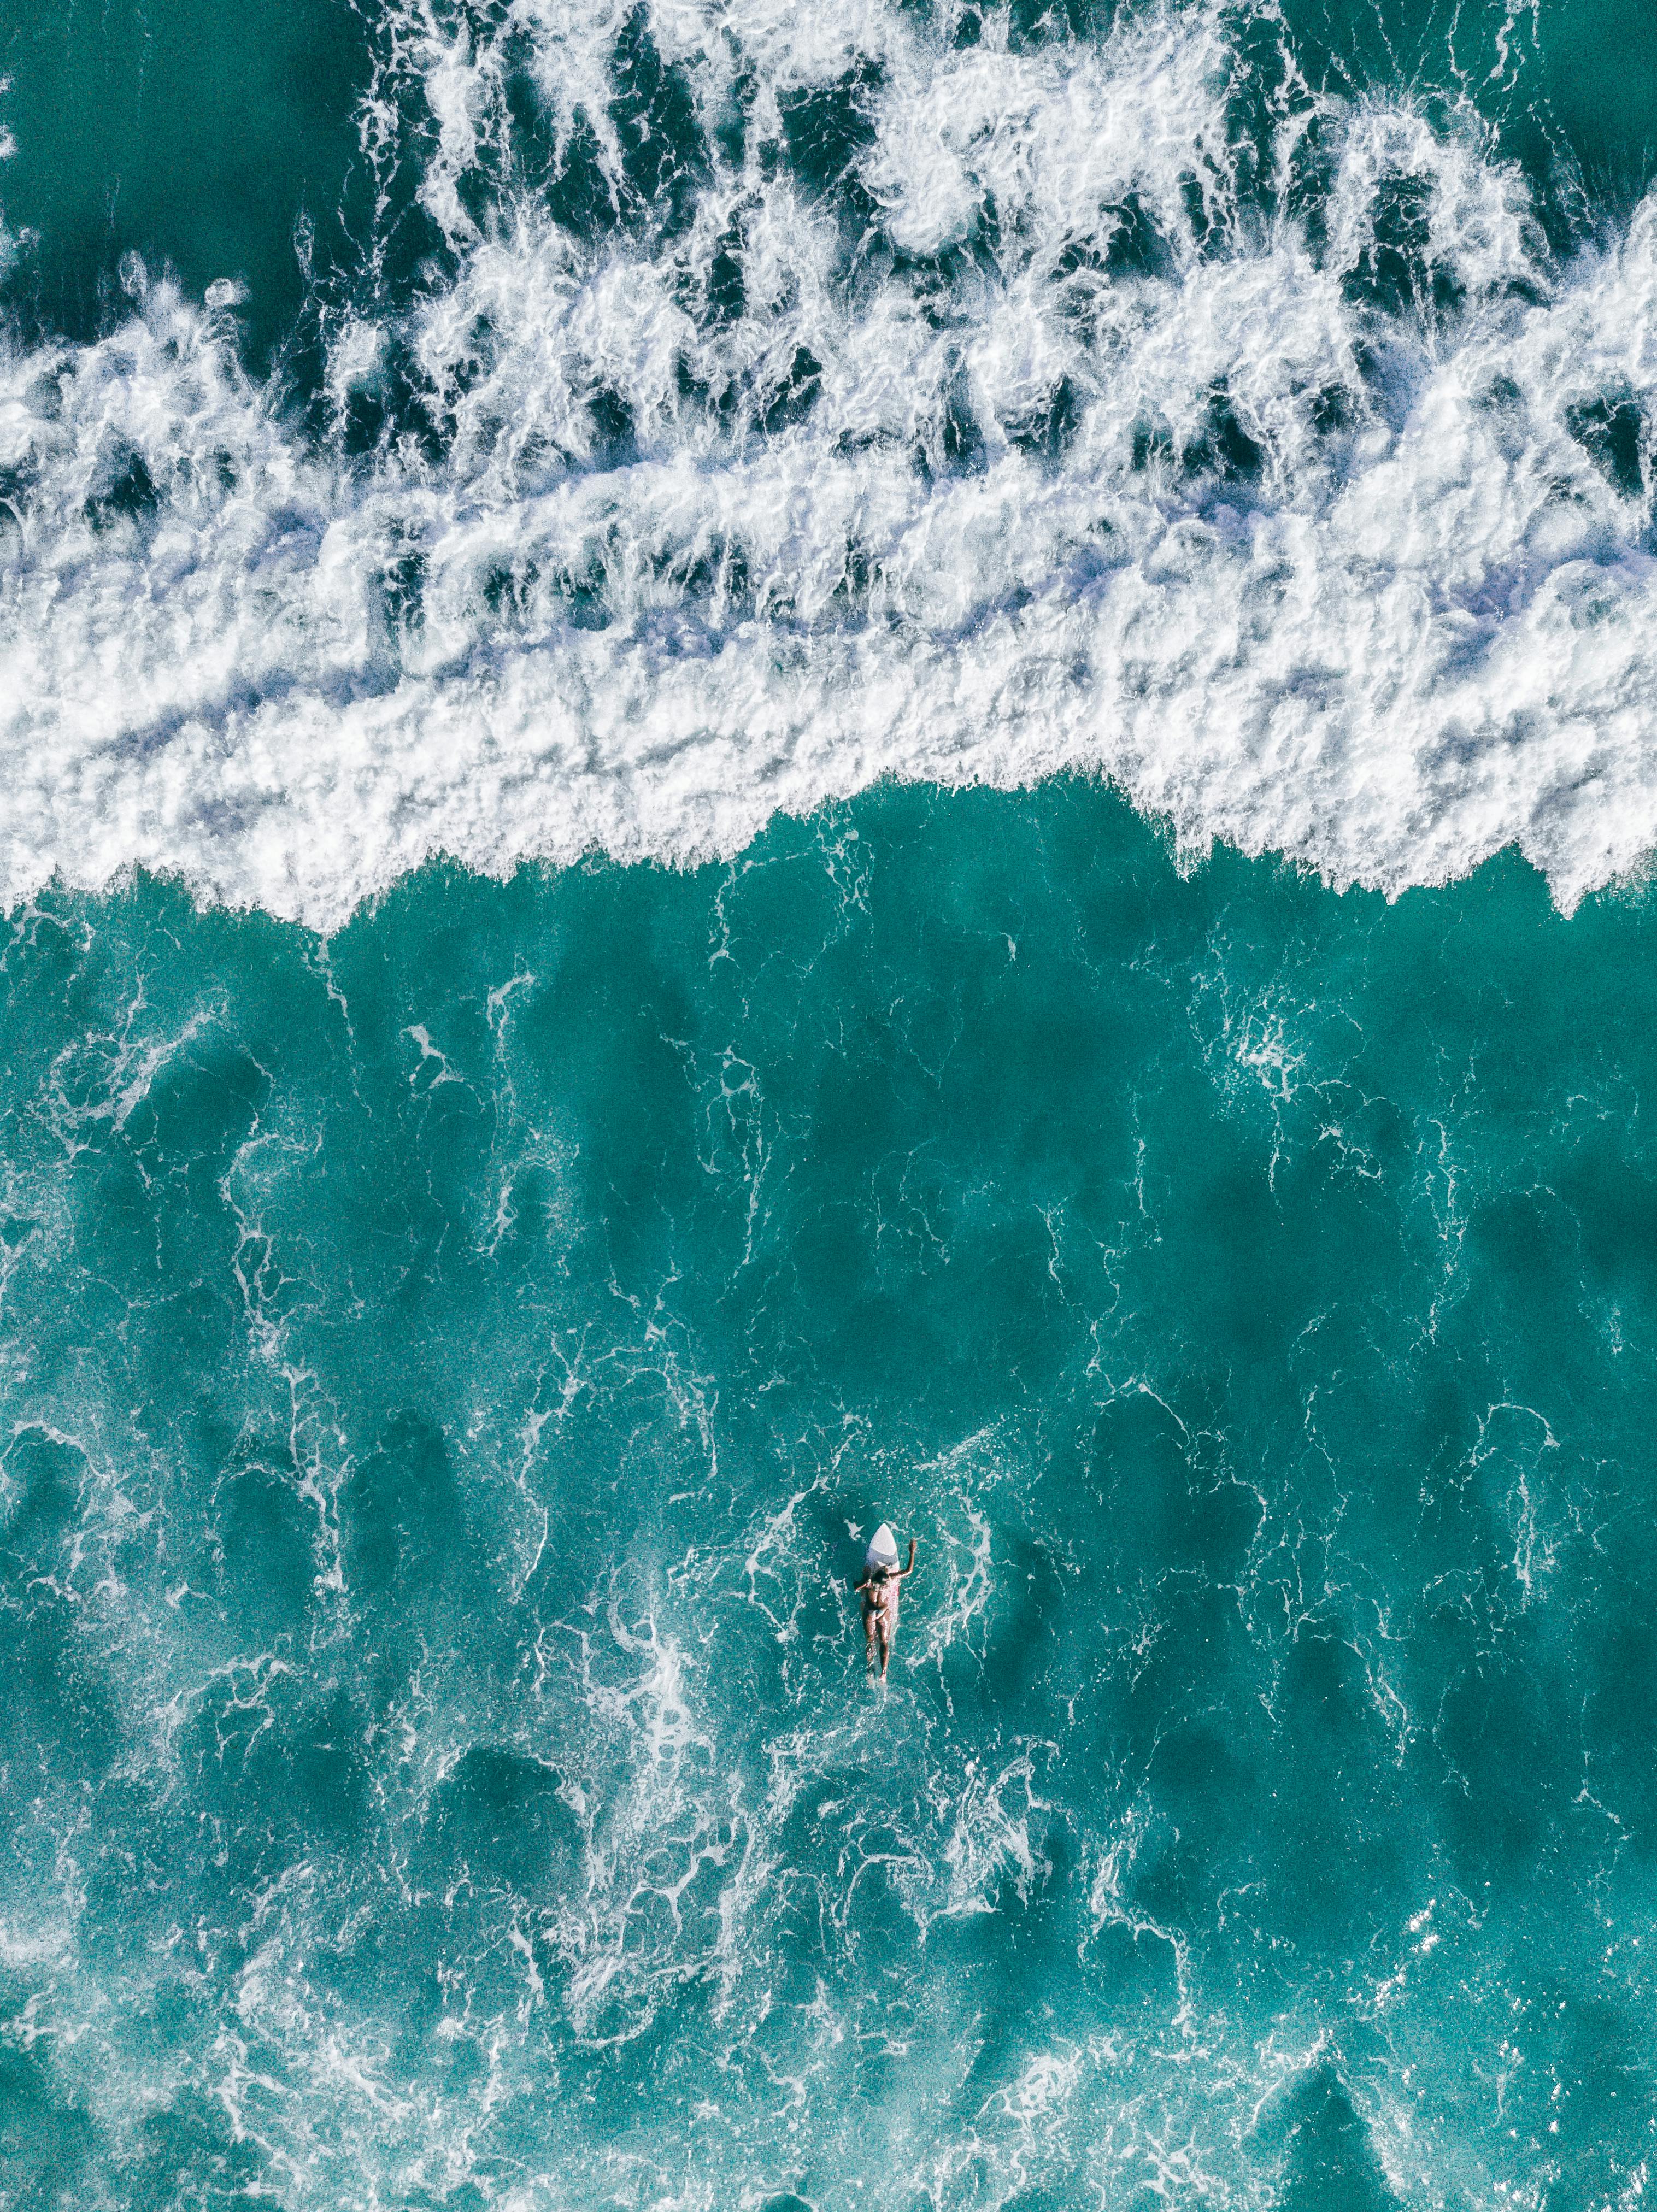 Ocean Waves Photos, Download The BEST Free Ocean Waves Stock